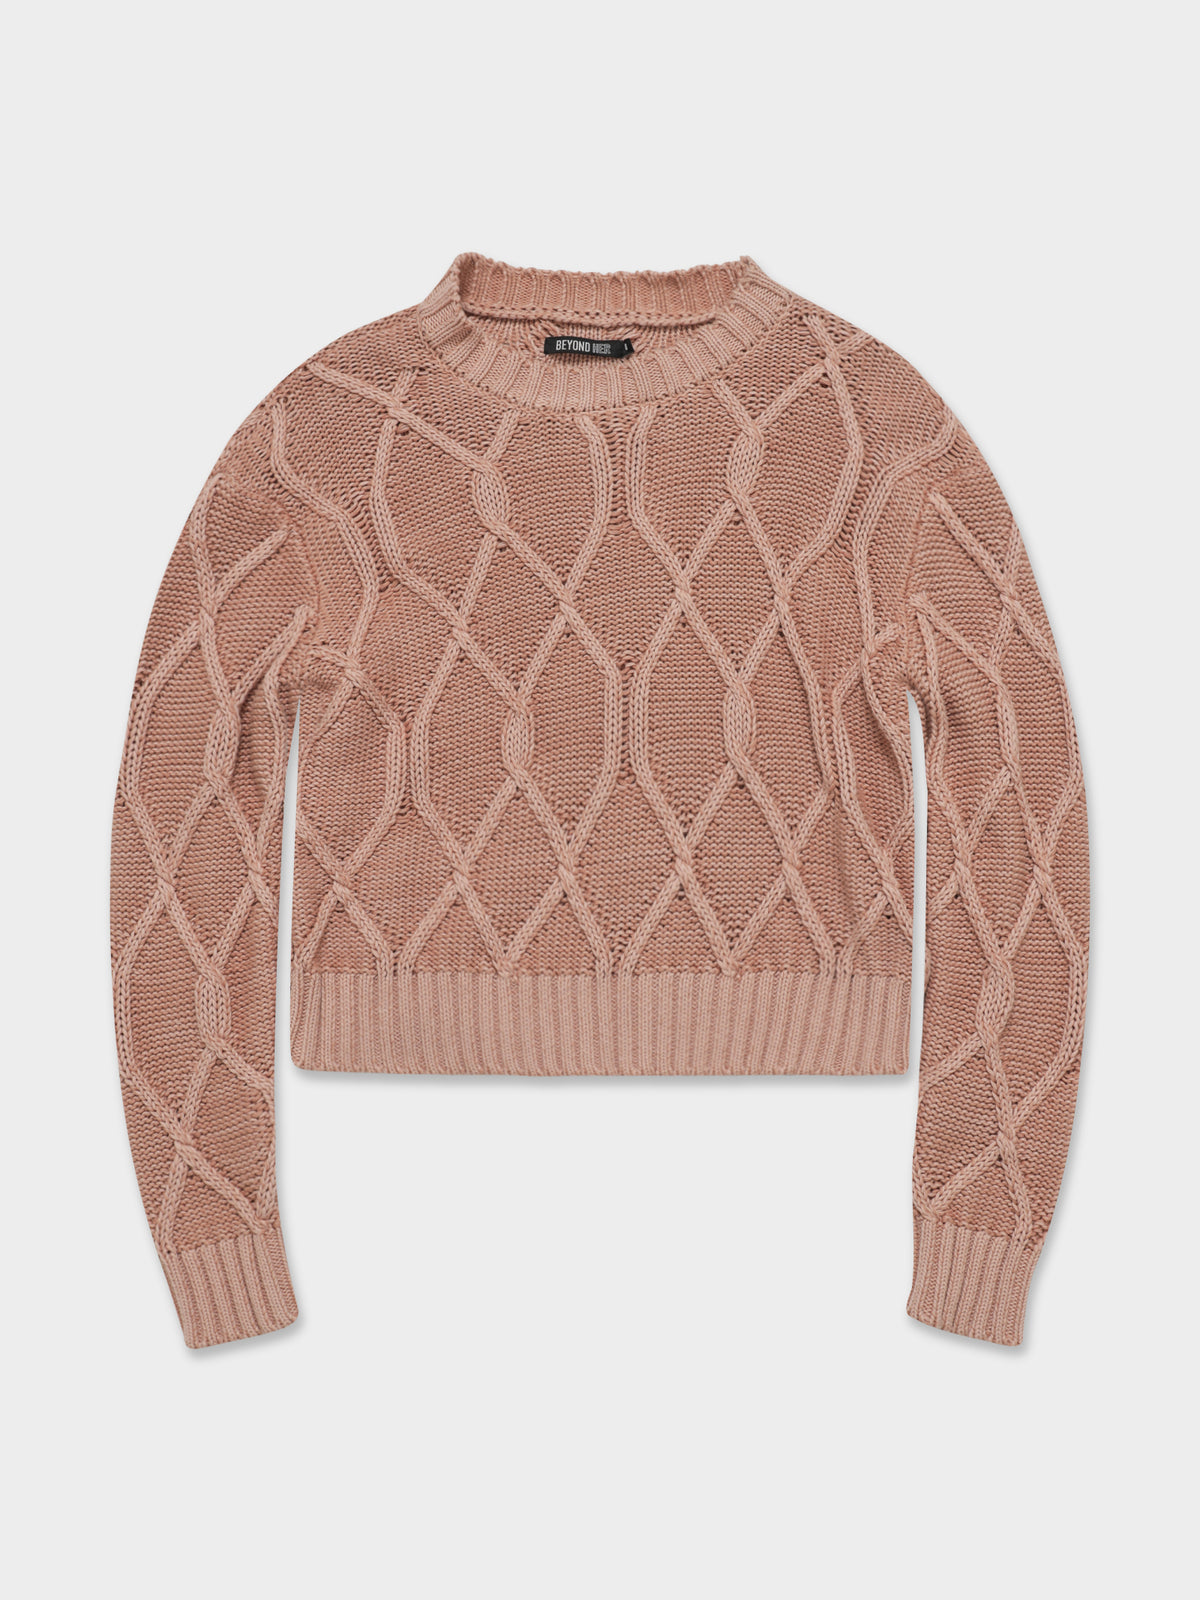 Nina Cable Knit Sweatshirt in Peach